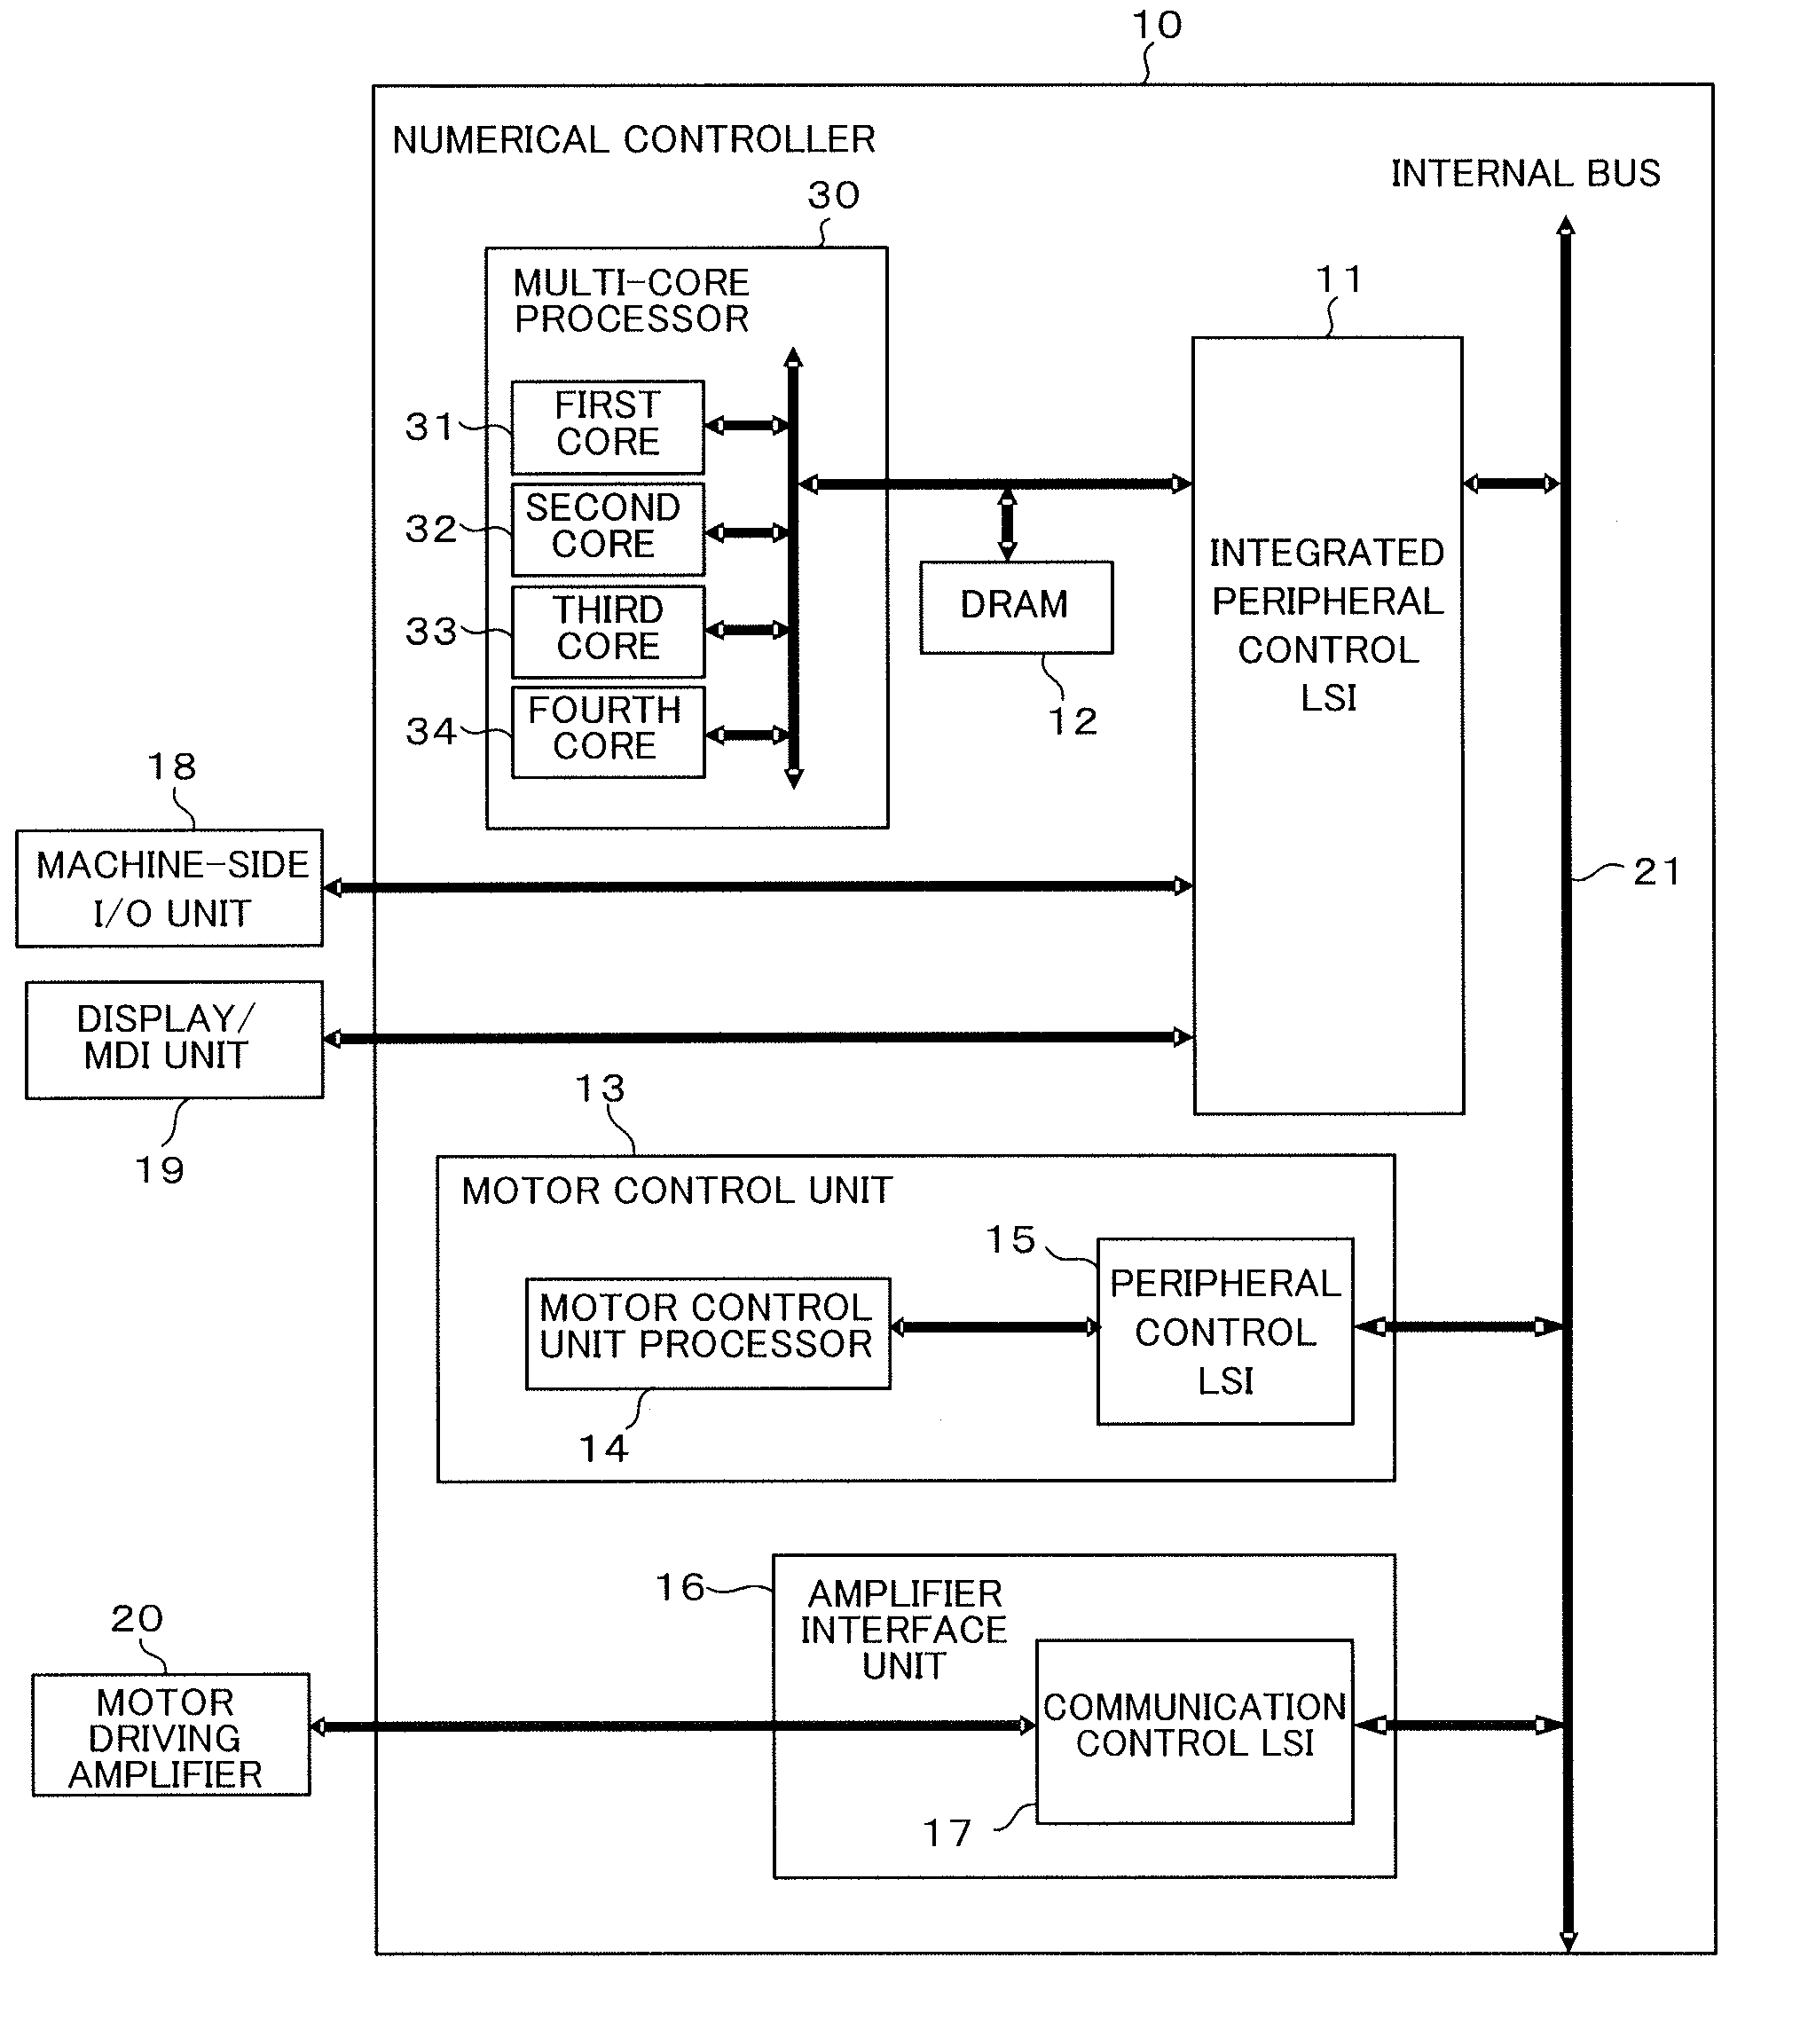 Numerical controller with multi-core processor